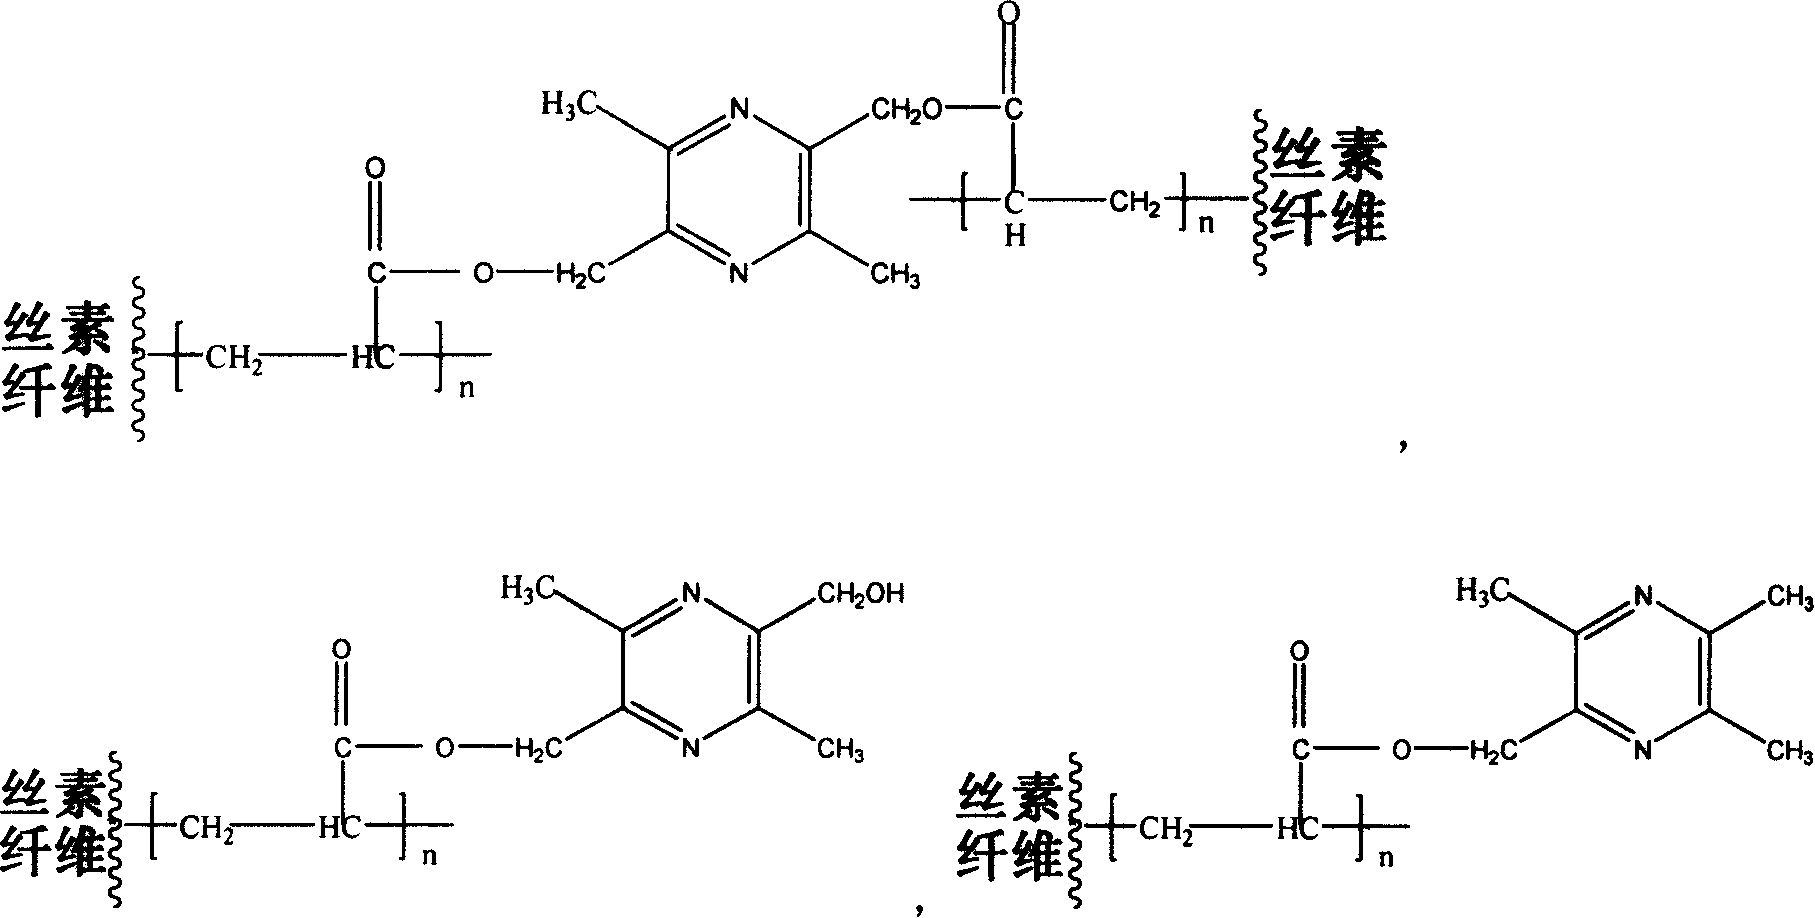 Tetramethylpyrazine derivatives modified silk fibroin protein fiber anti-coagulant material and its preparation method